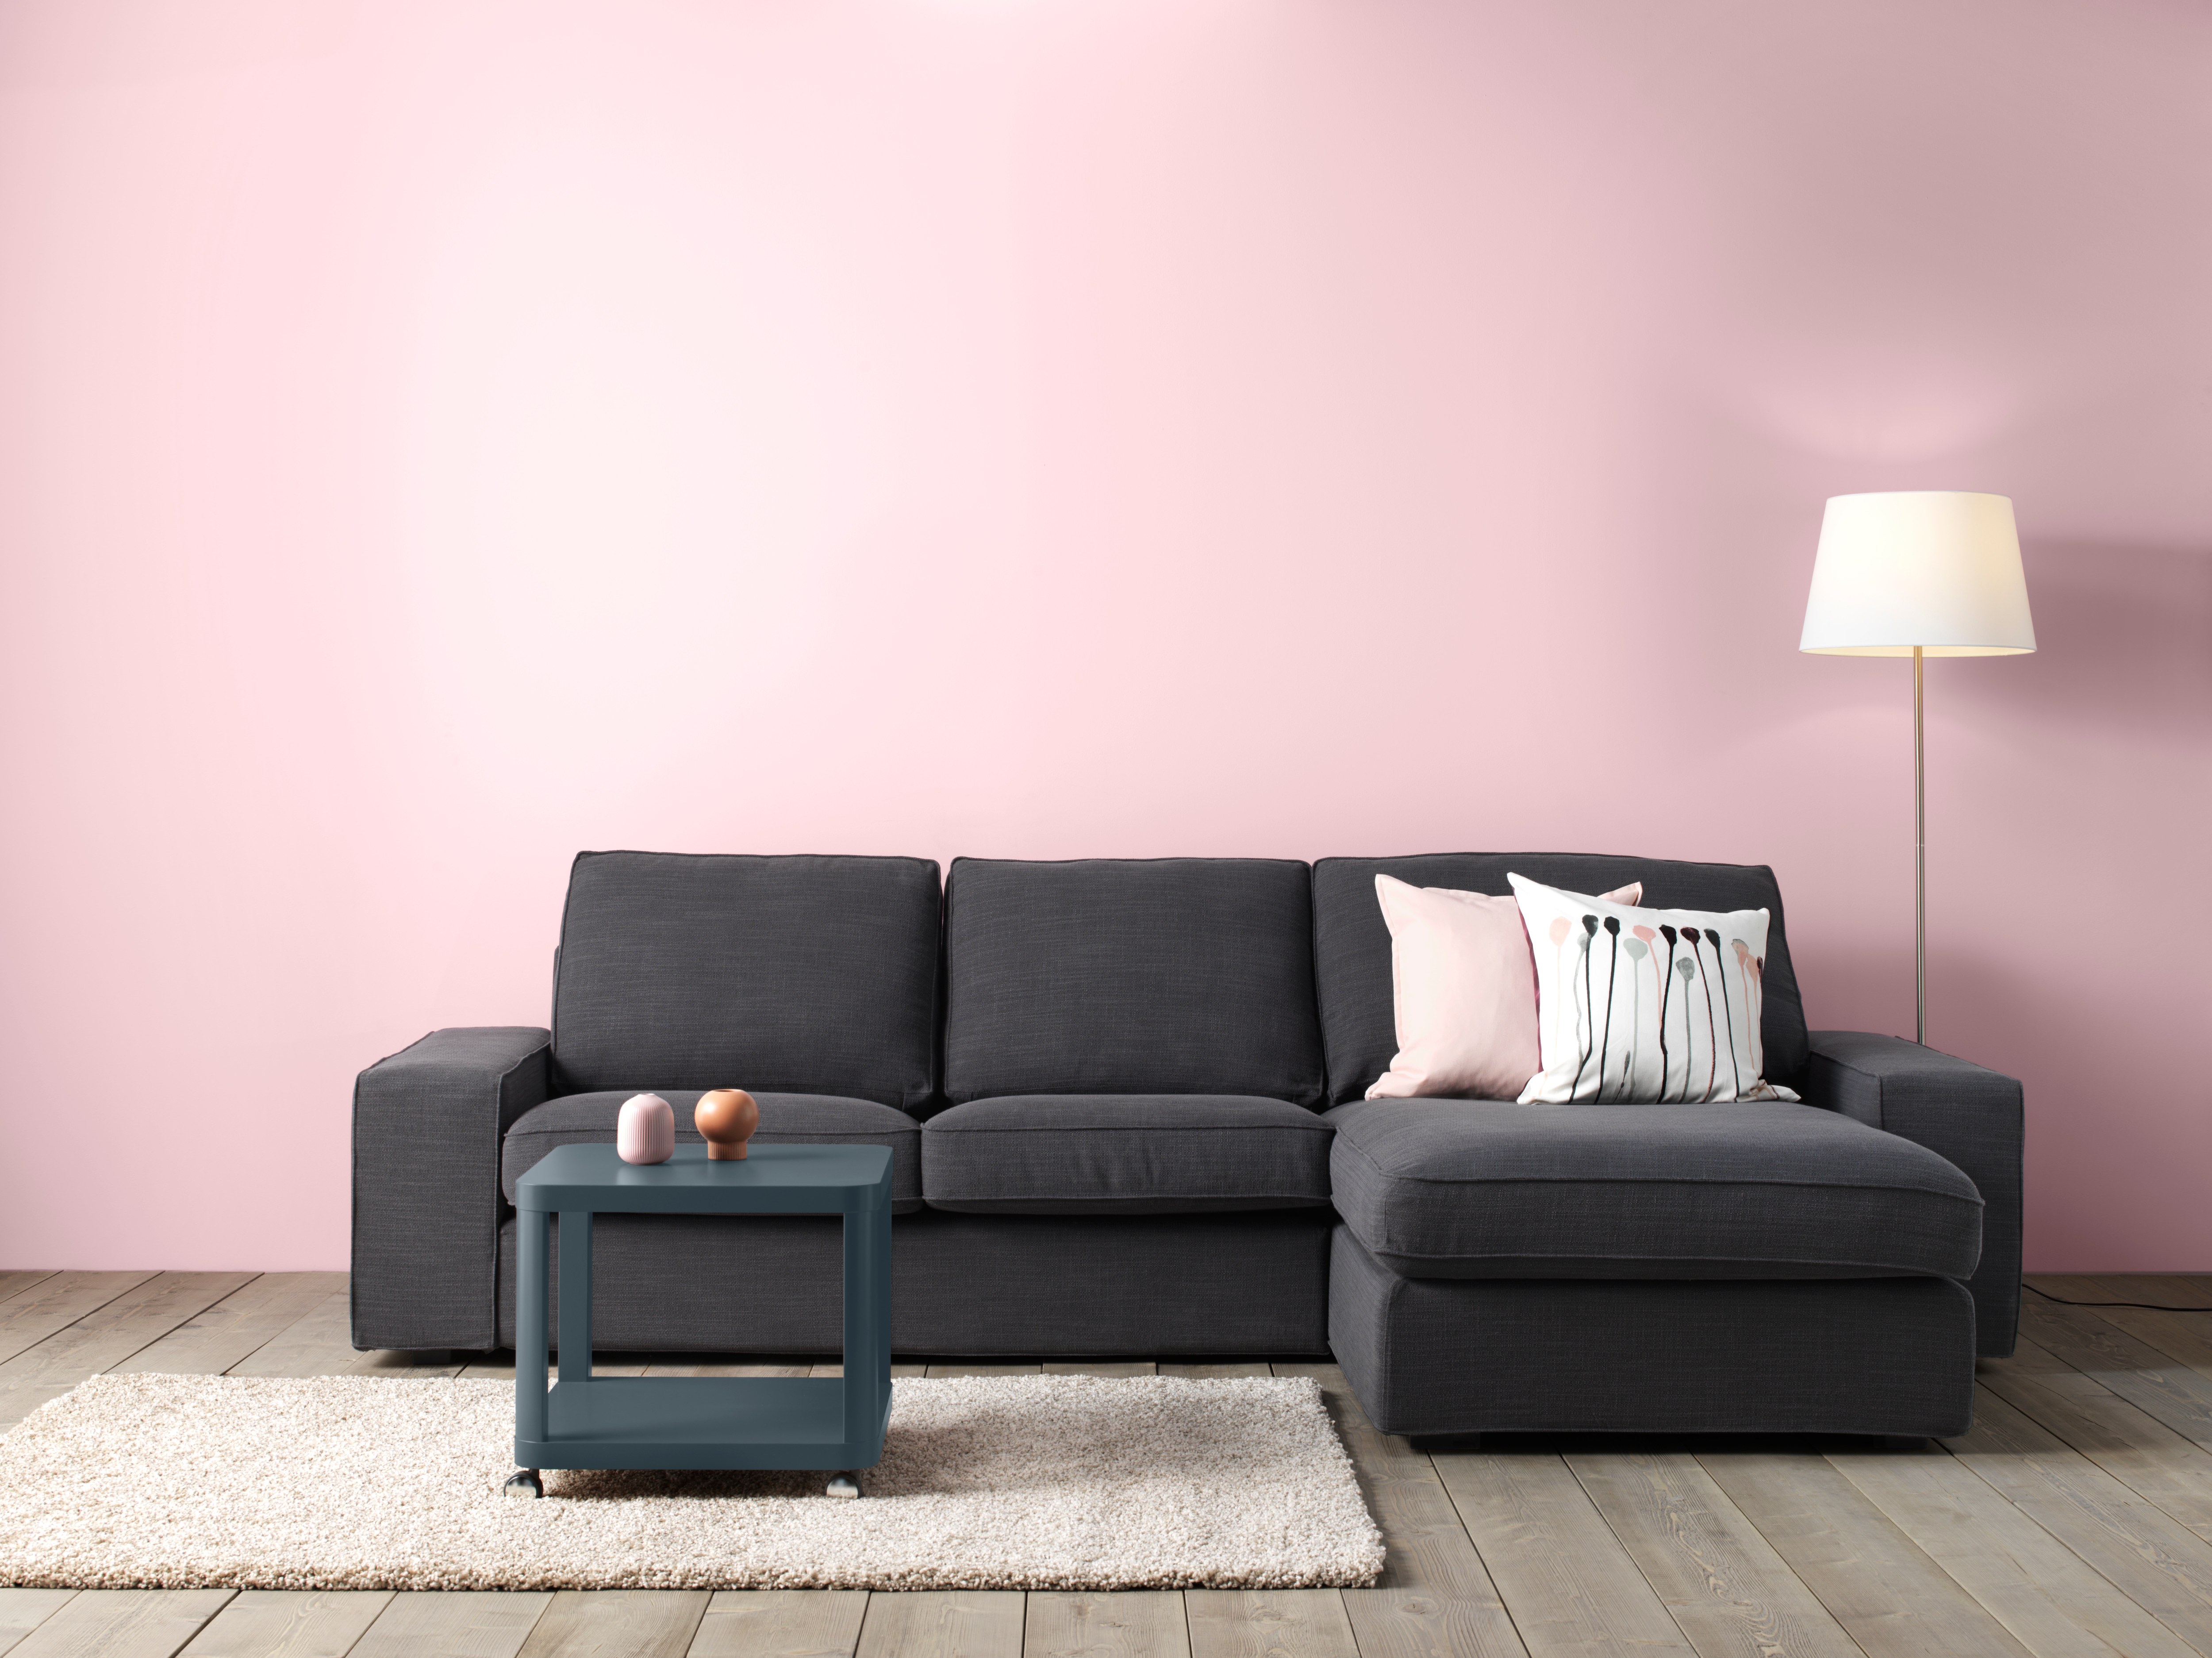 KIVIK corner sofa in dark grey next to lamp and in front of pink wall